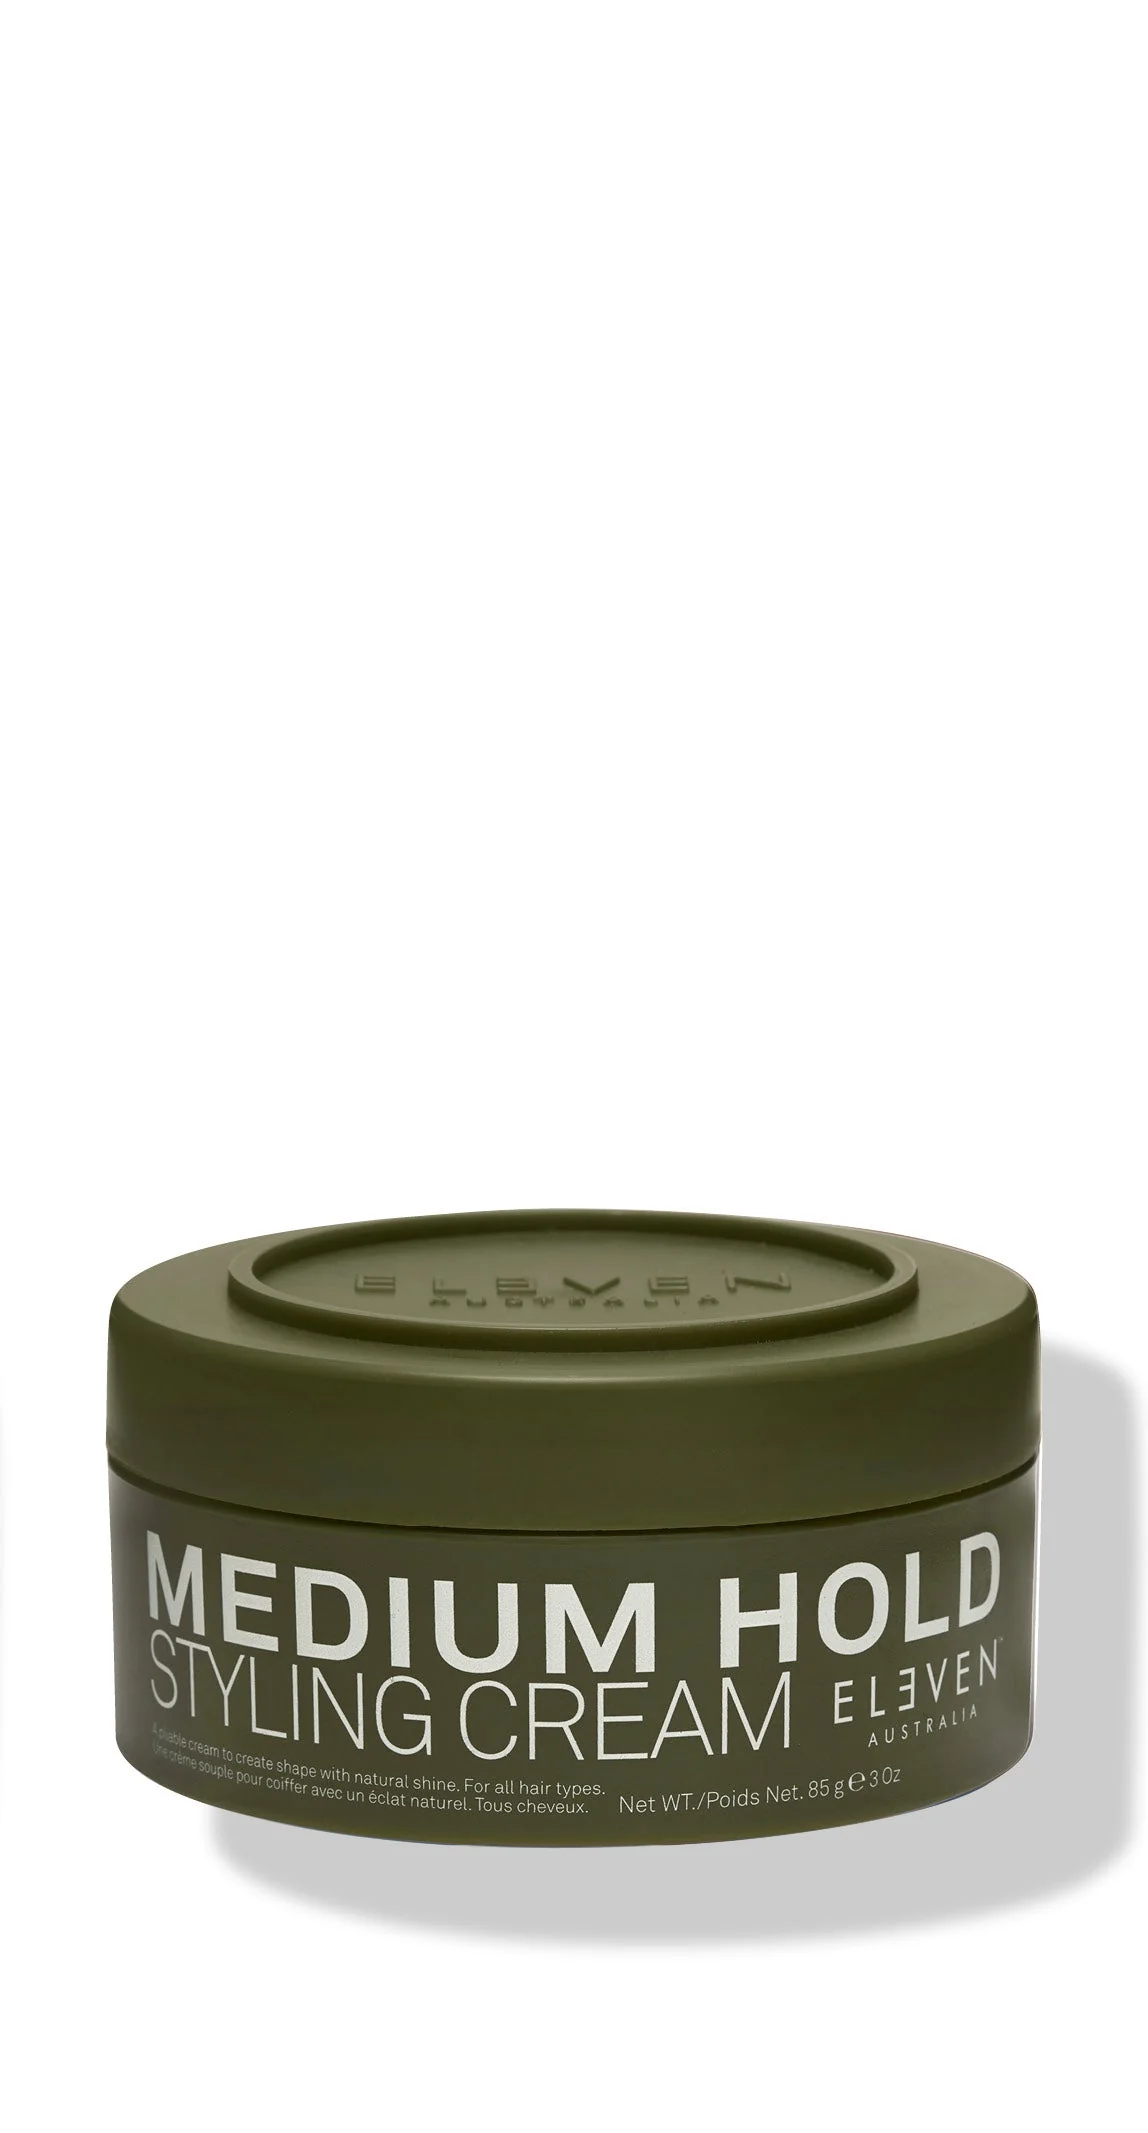 Medium Hold Styling Cream